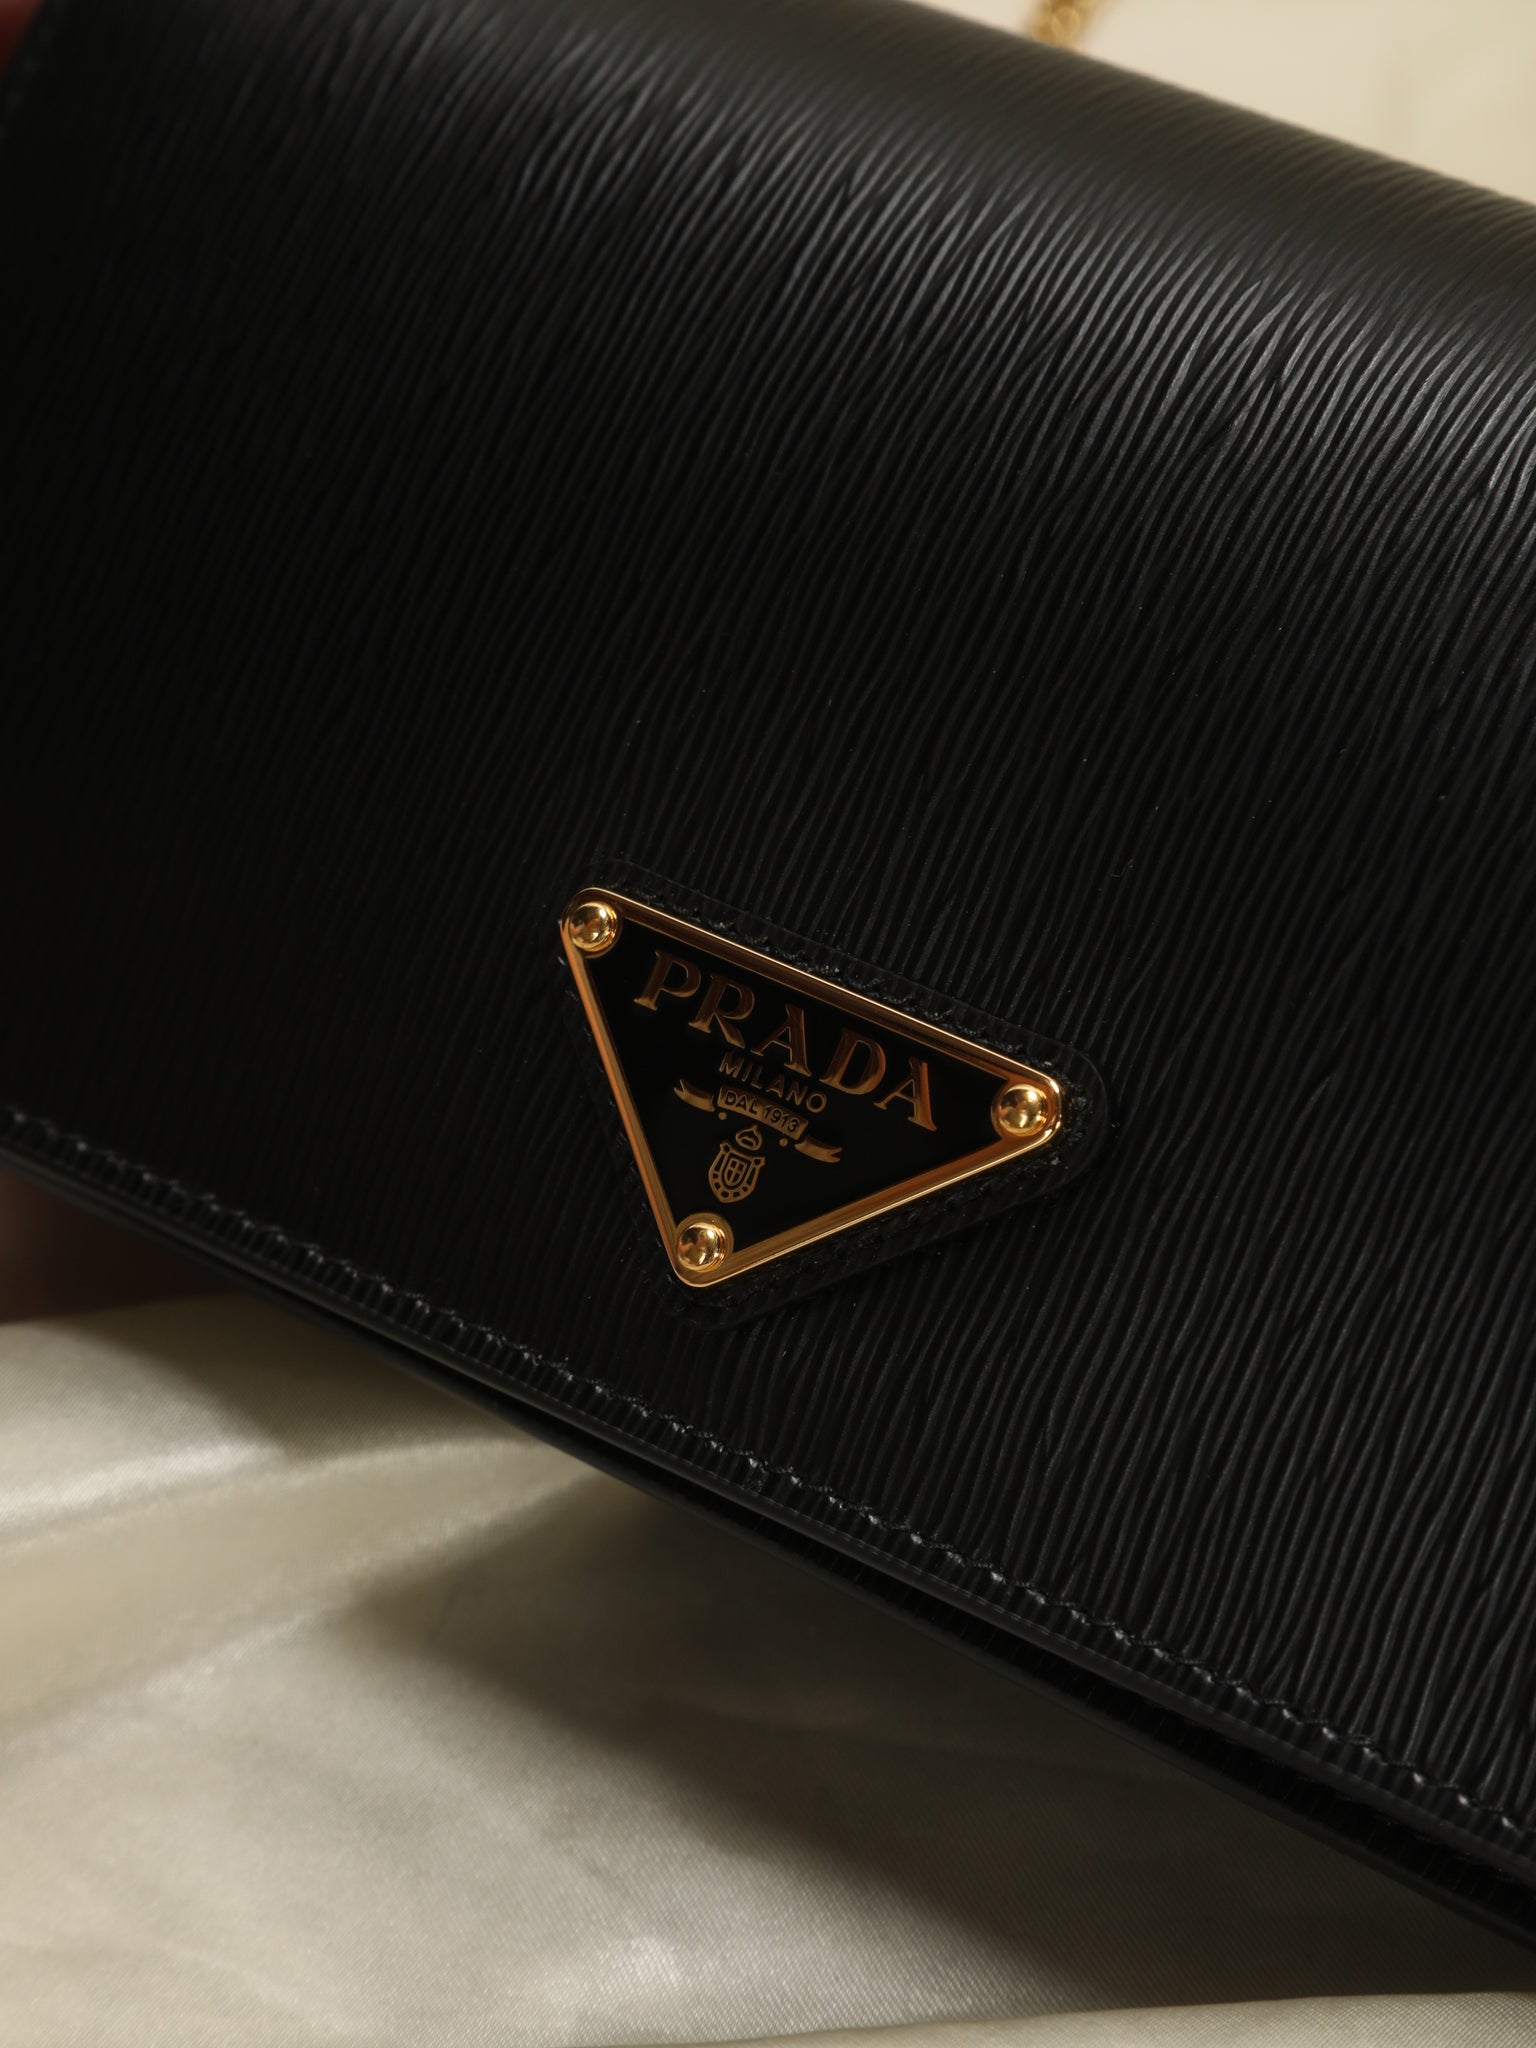 Original Brand New Prada Vitello Grain Leather Wallet on Chain - Black